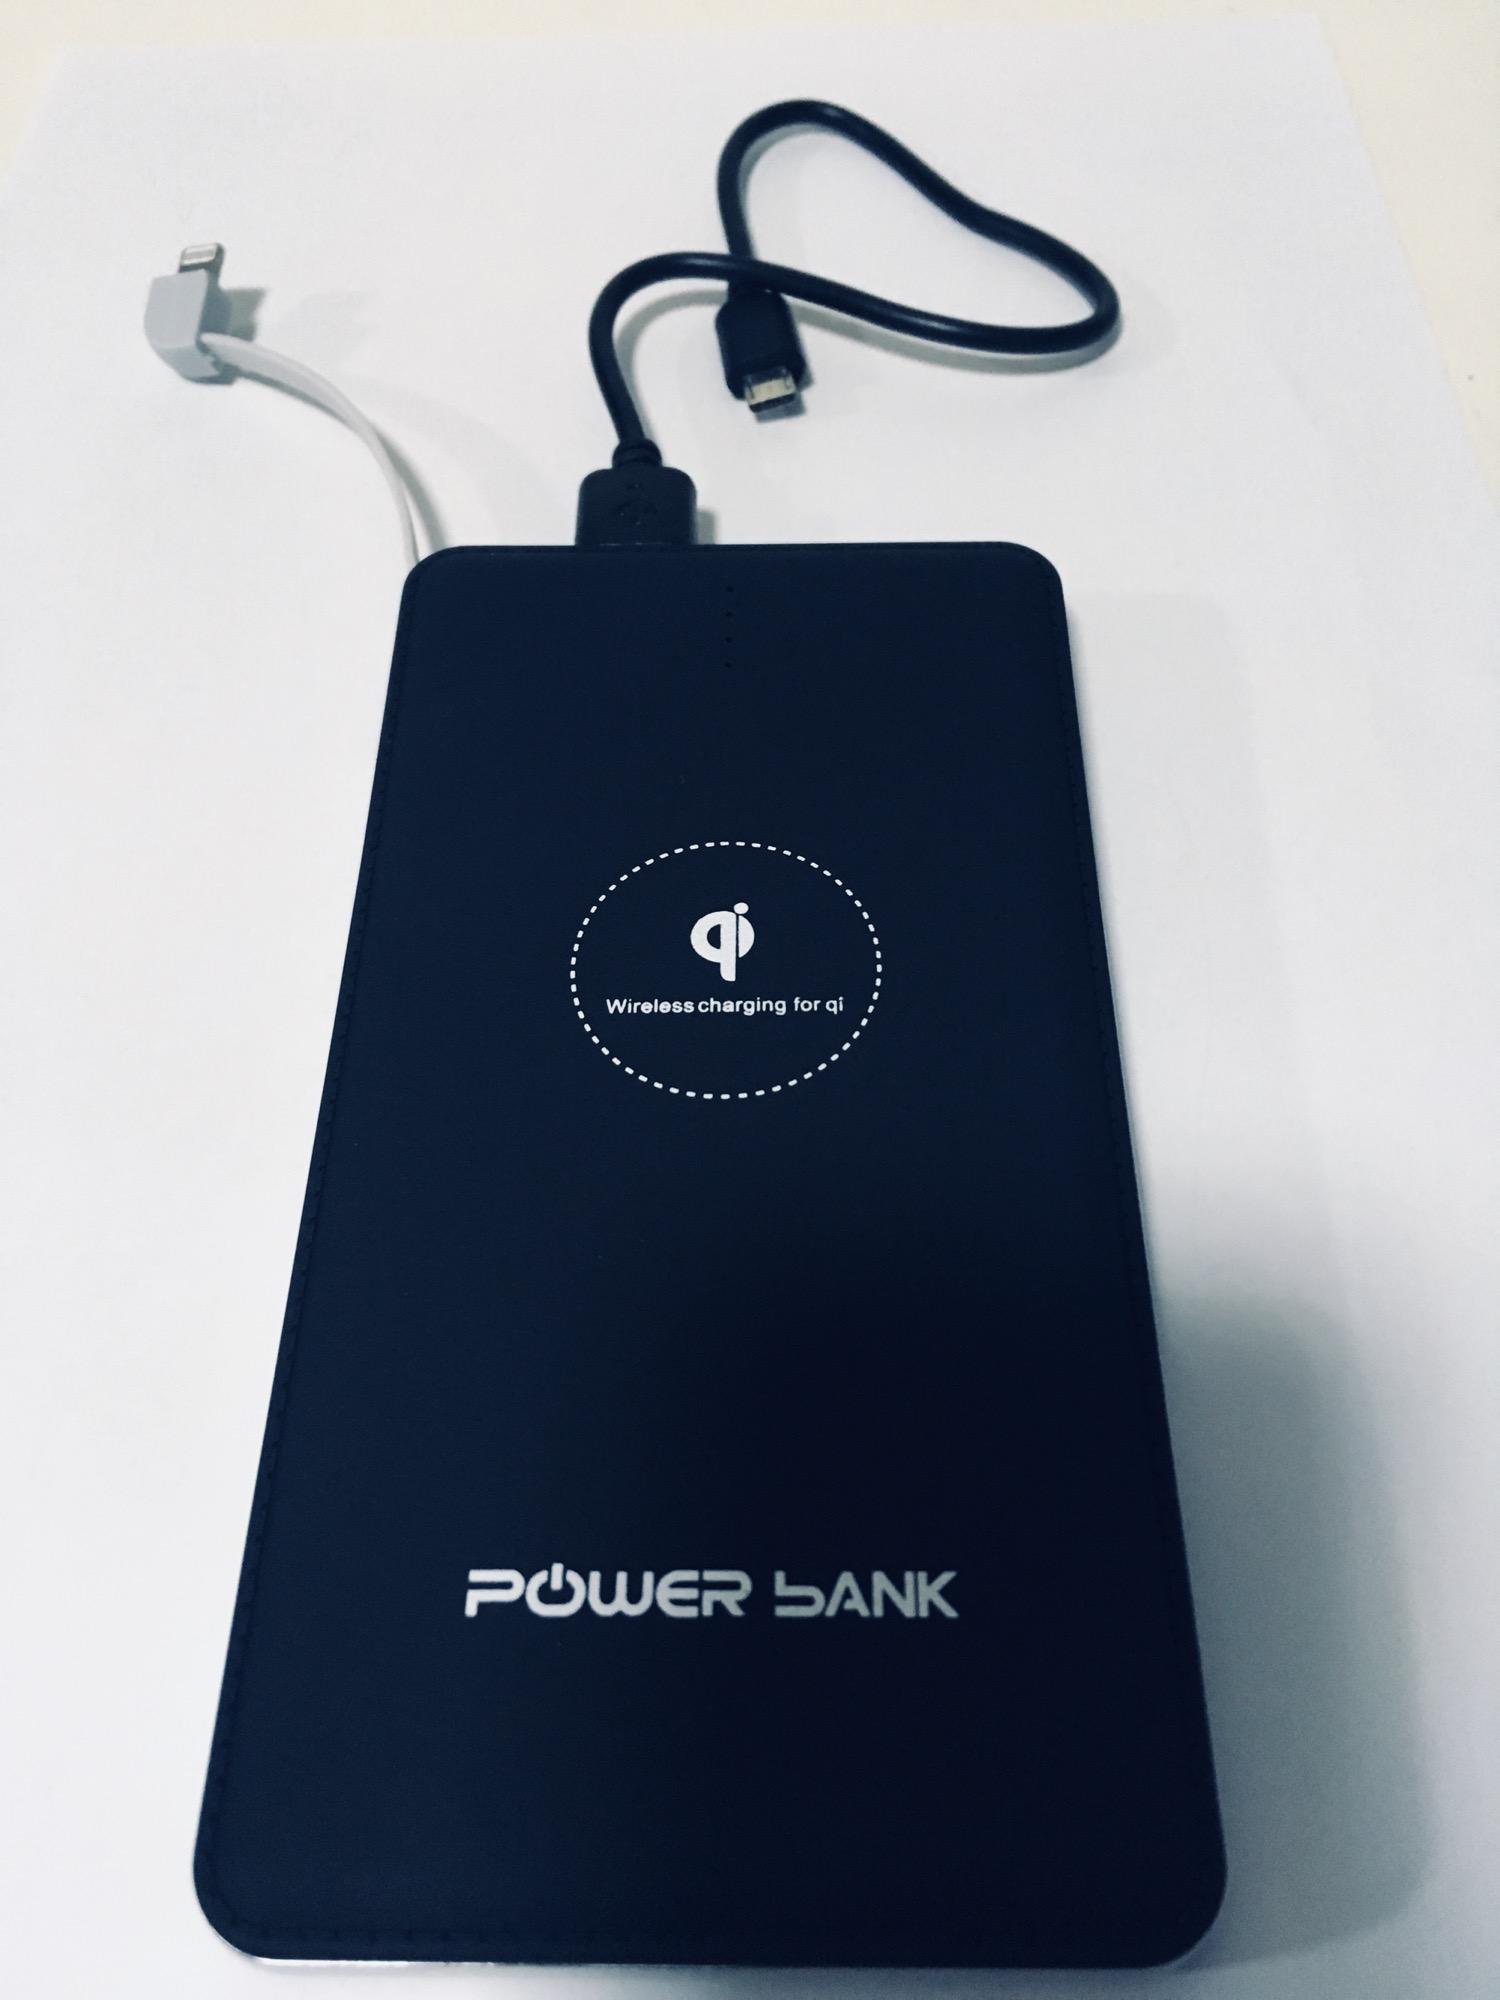 PowerBank wireless charger 20000 mAH slim light weight compact fast charging Qi Portable Power Bank 20000mAH